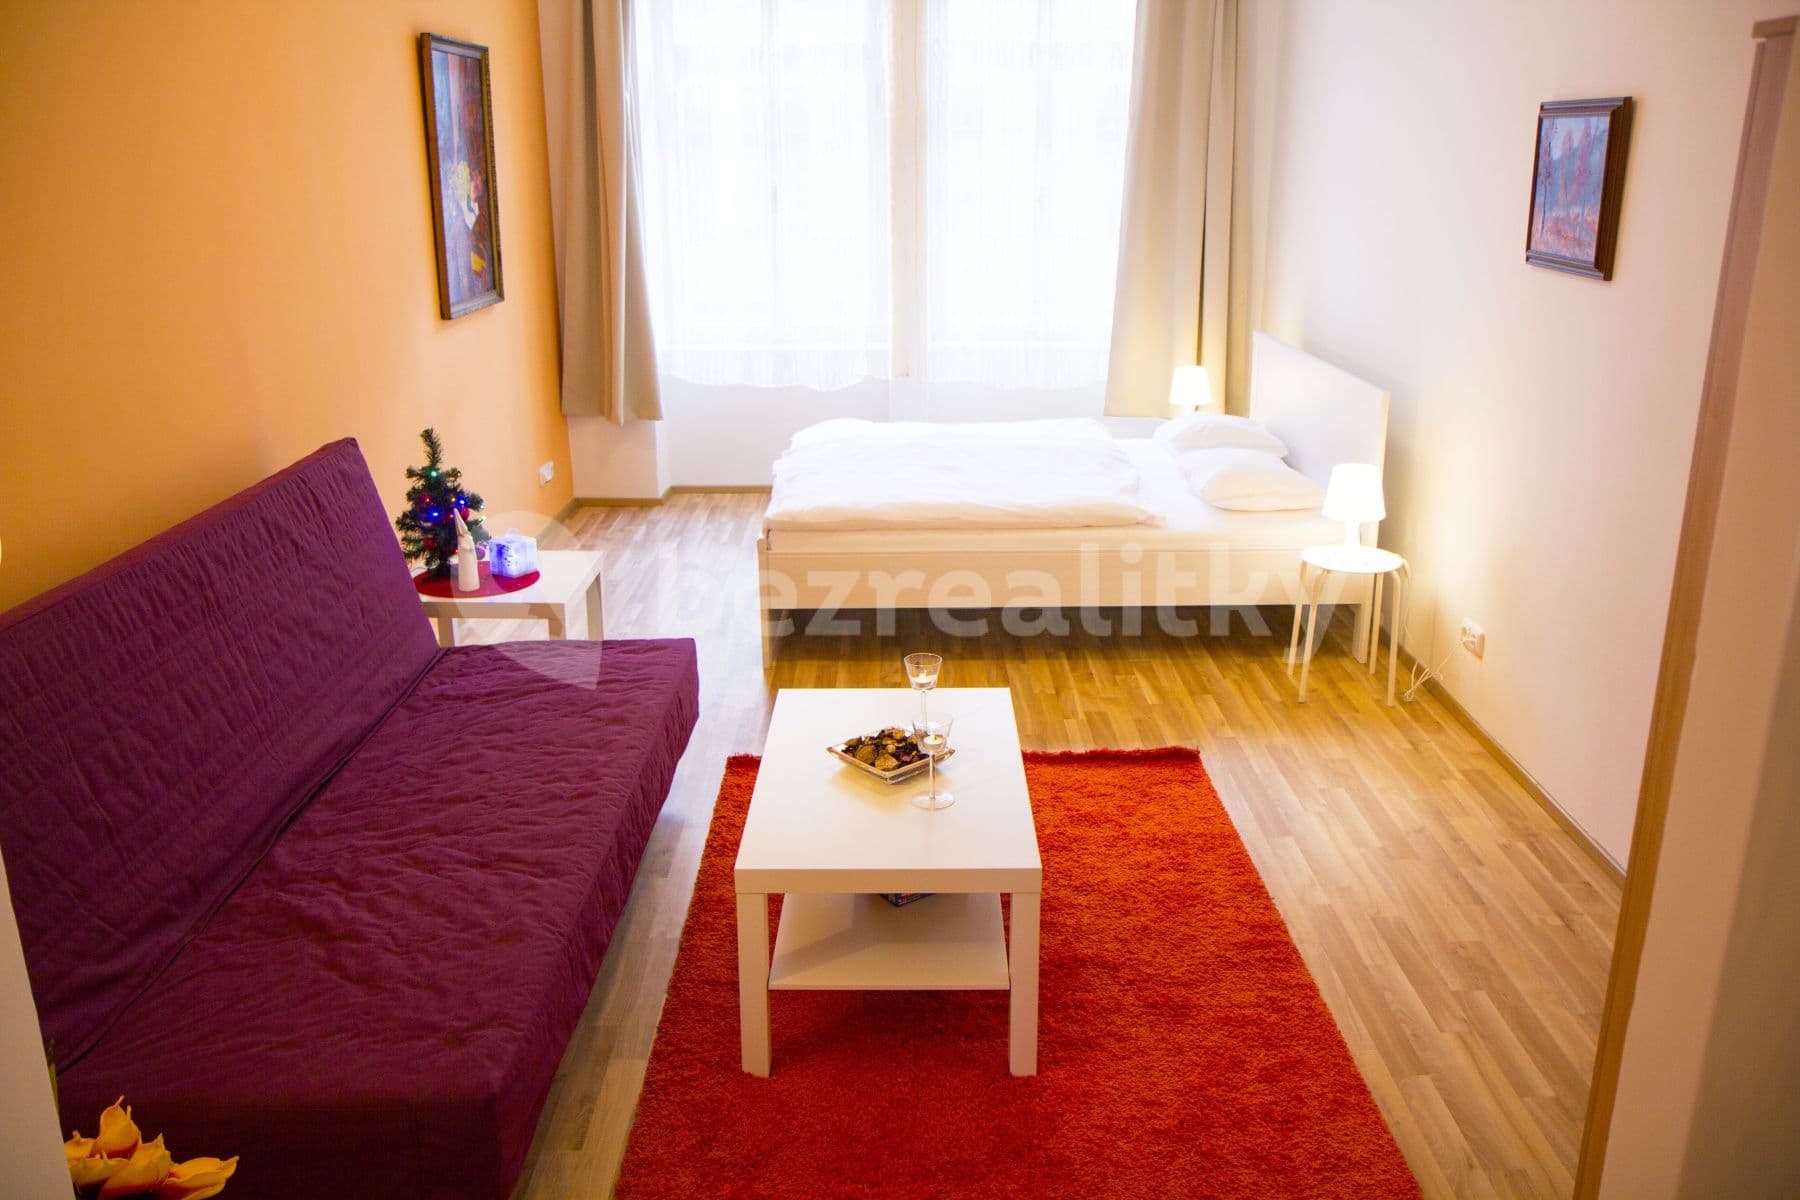 1 bedroom with open-plan kitchen flat to rent, 50 m², Lidická, Prague, Prague